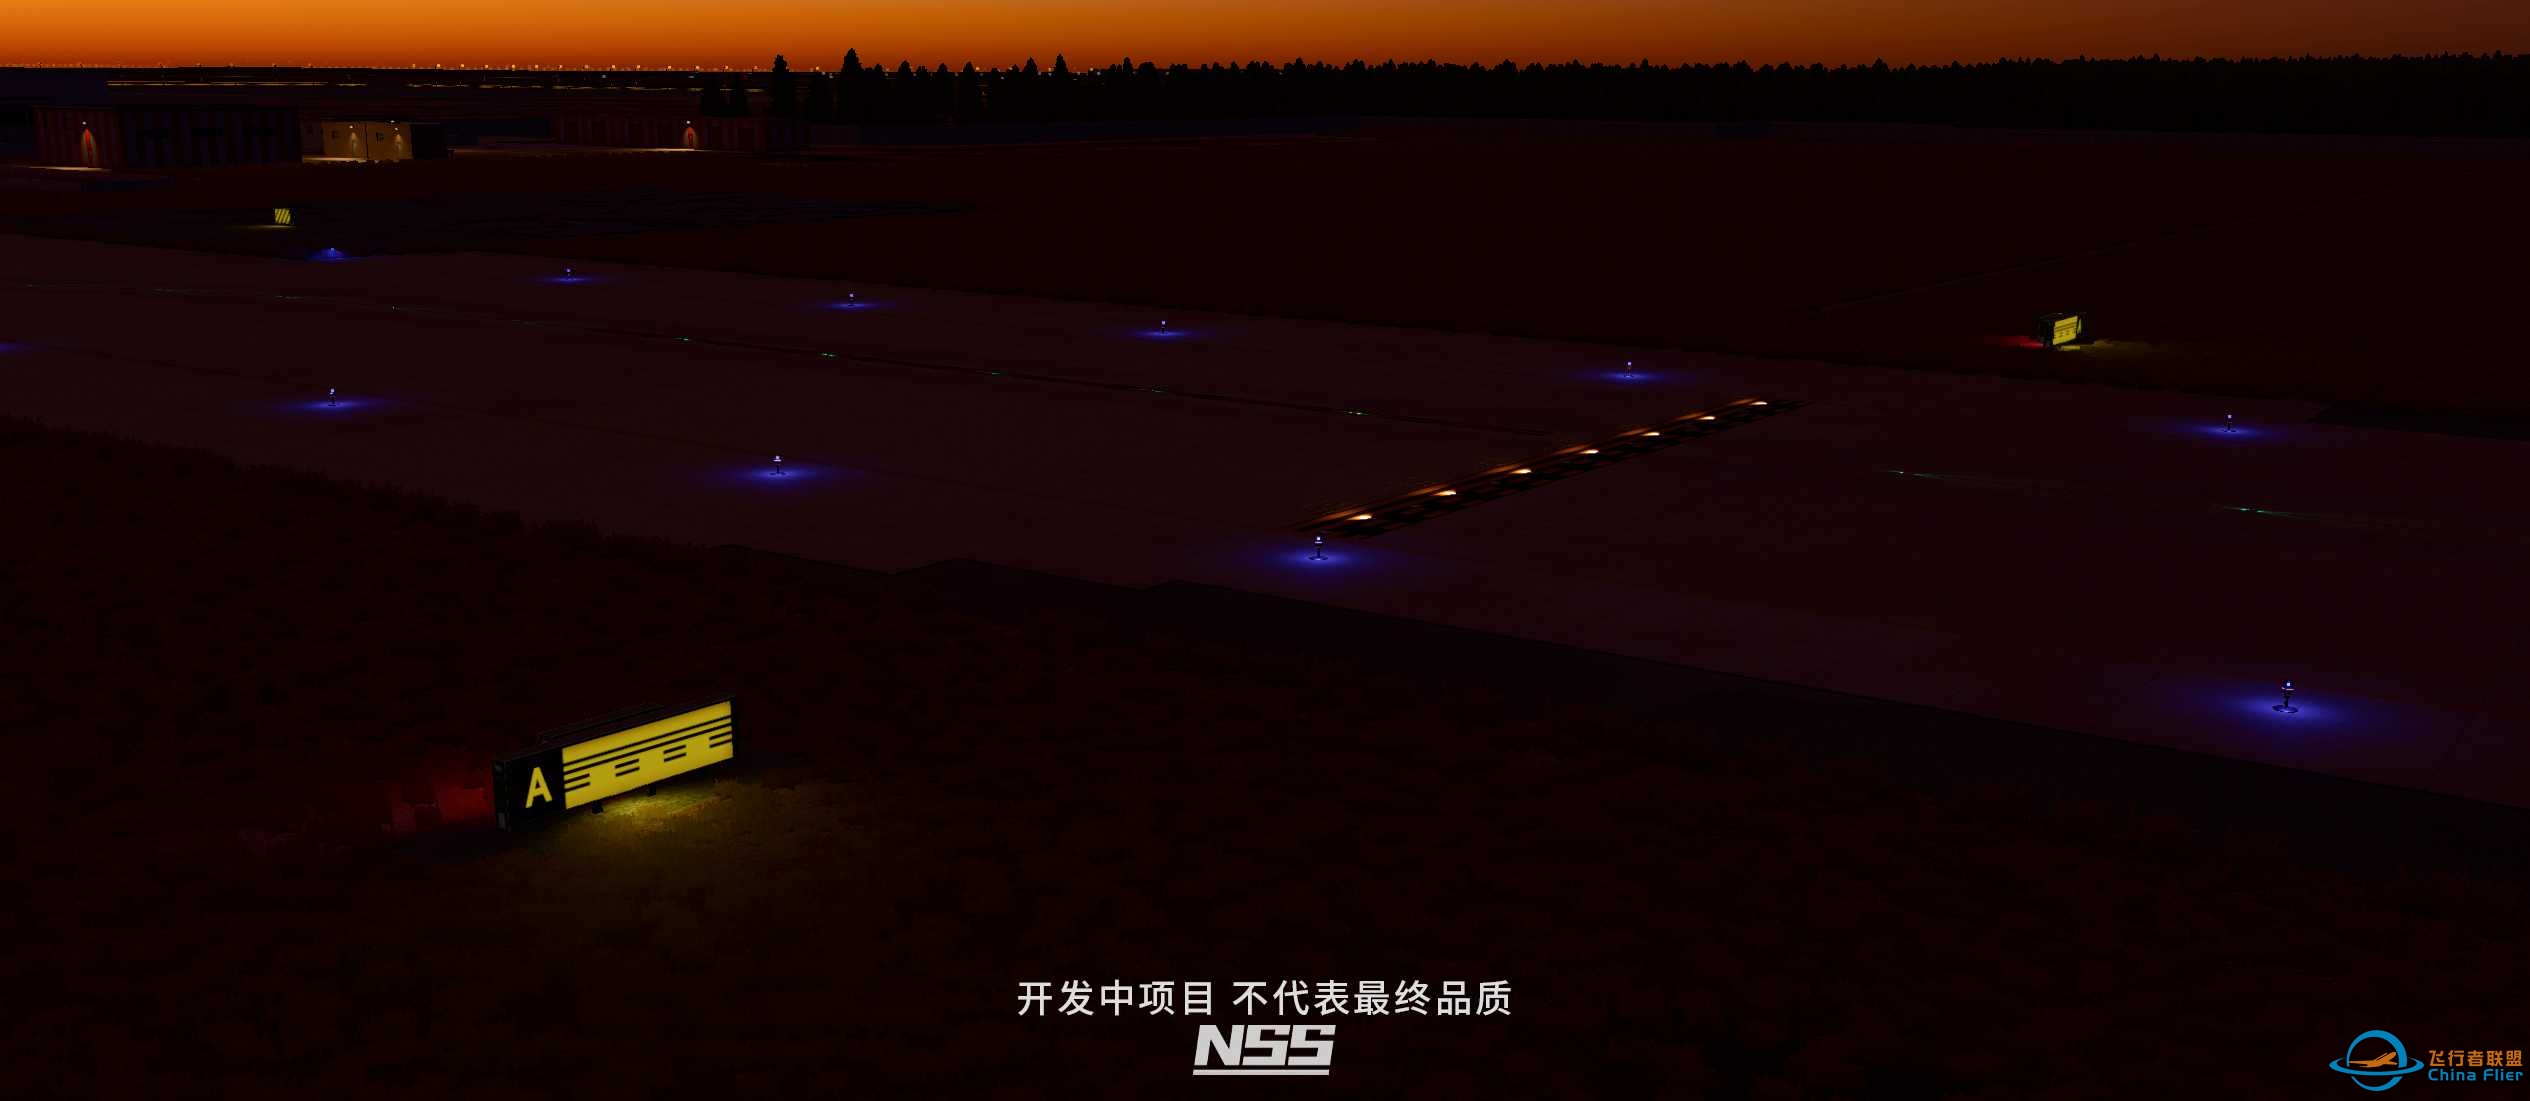 NSS地景开发组 ZSJN 济南遥墙国际机场项目预览 兼公布-9532 